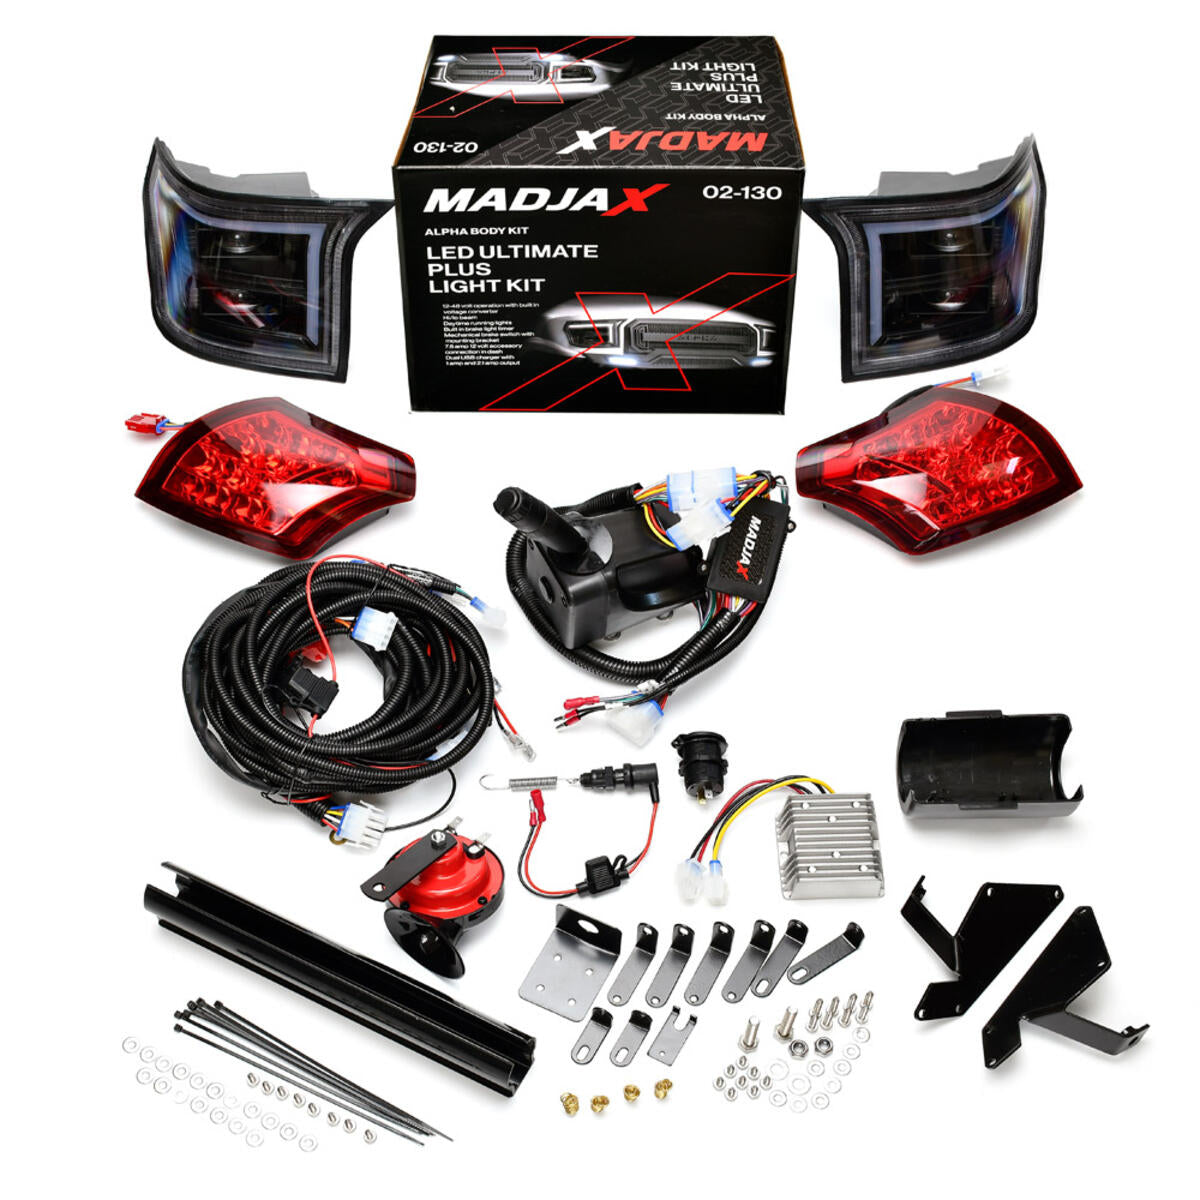 MadJax LED Ultimate Plus Light Kit for Alpha Body 02-130